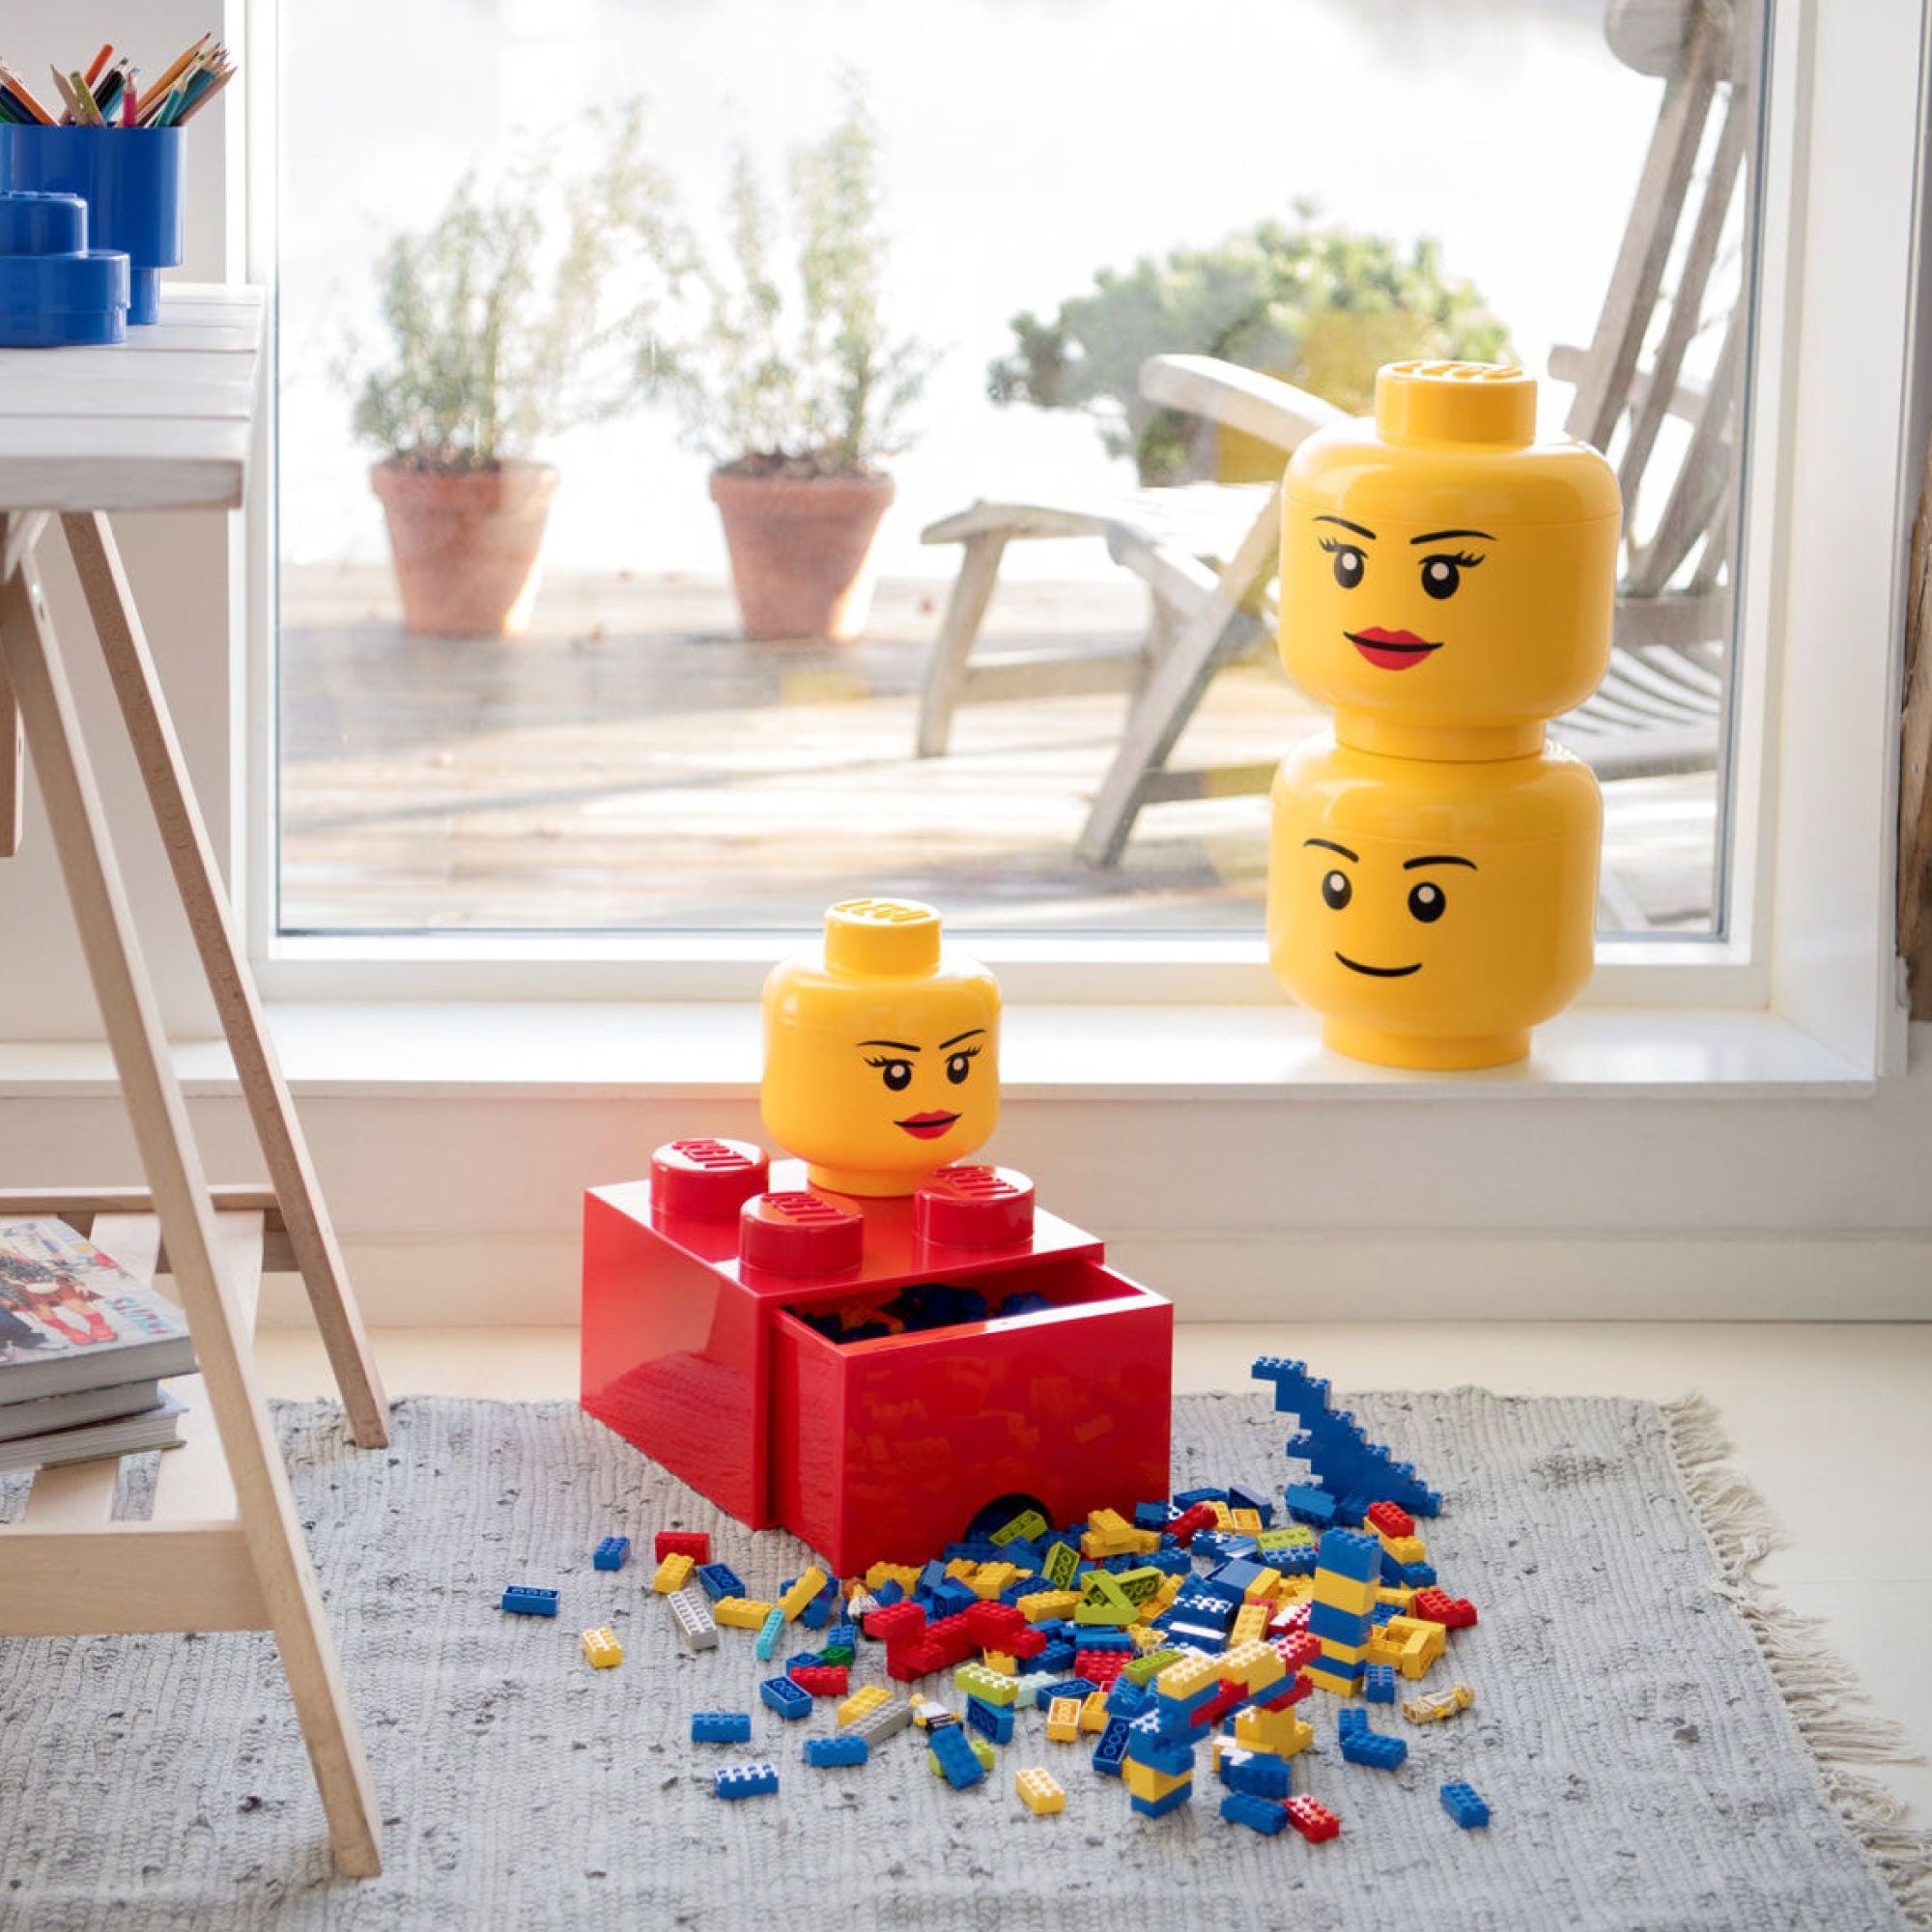 LEGO Gabby's Dollhouse Ship & Spa Set 10786 + Large LEGO Storage Head